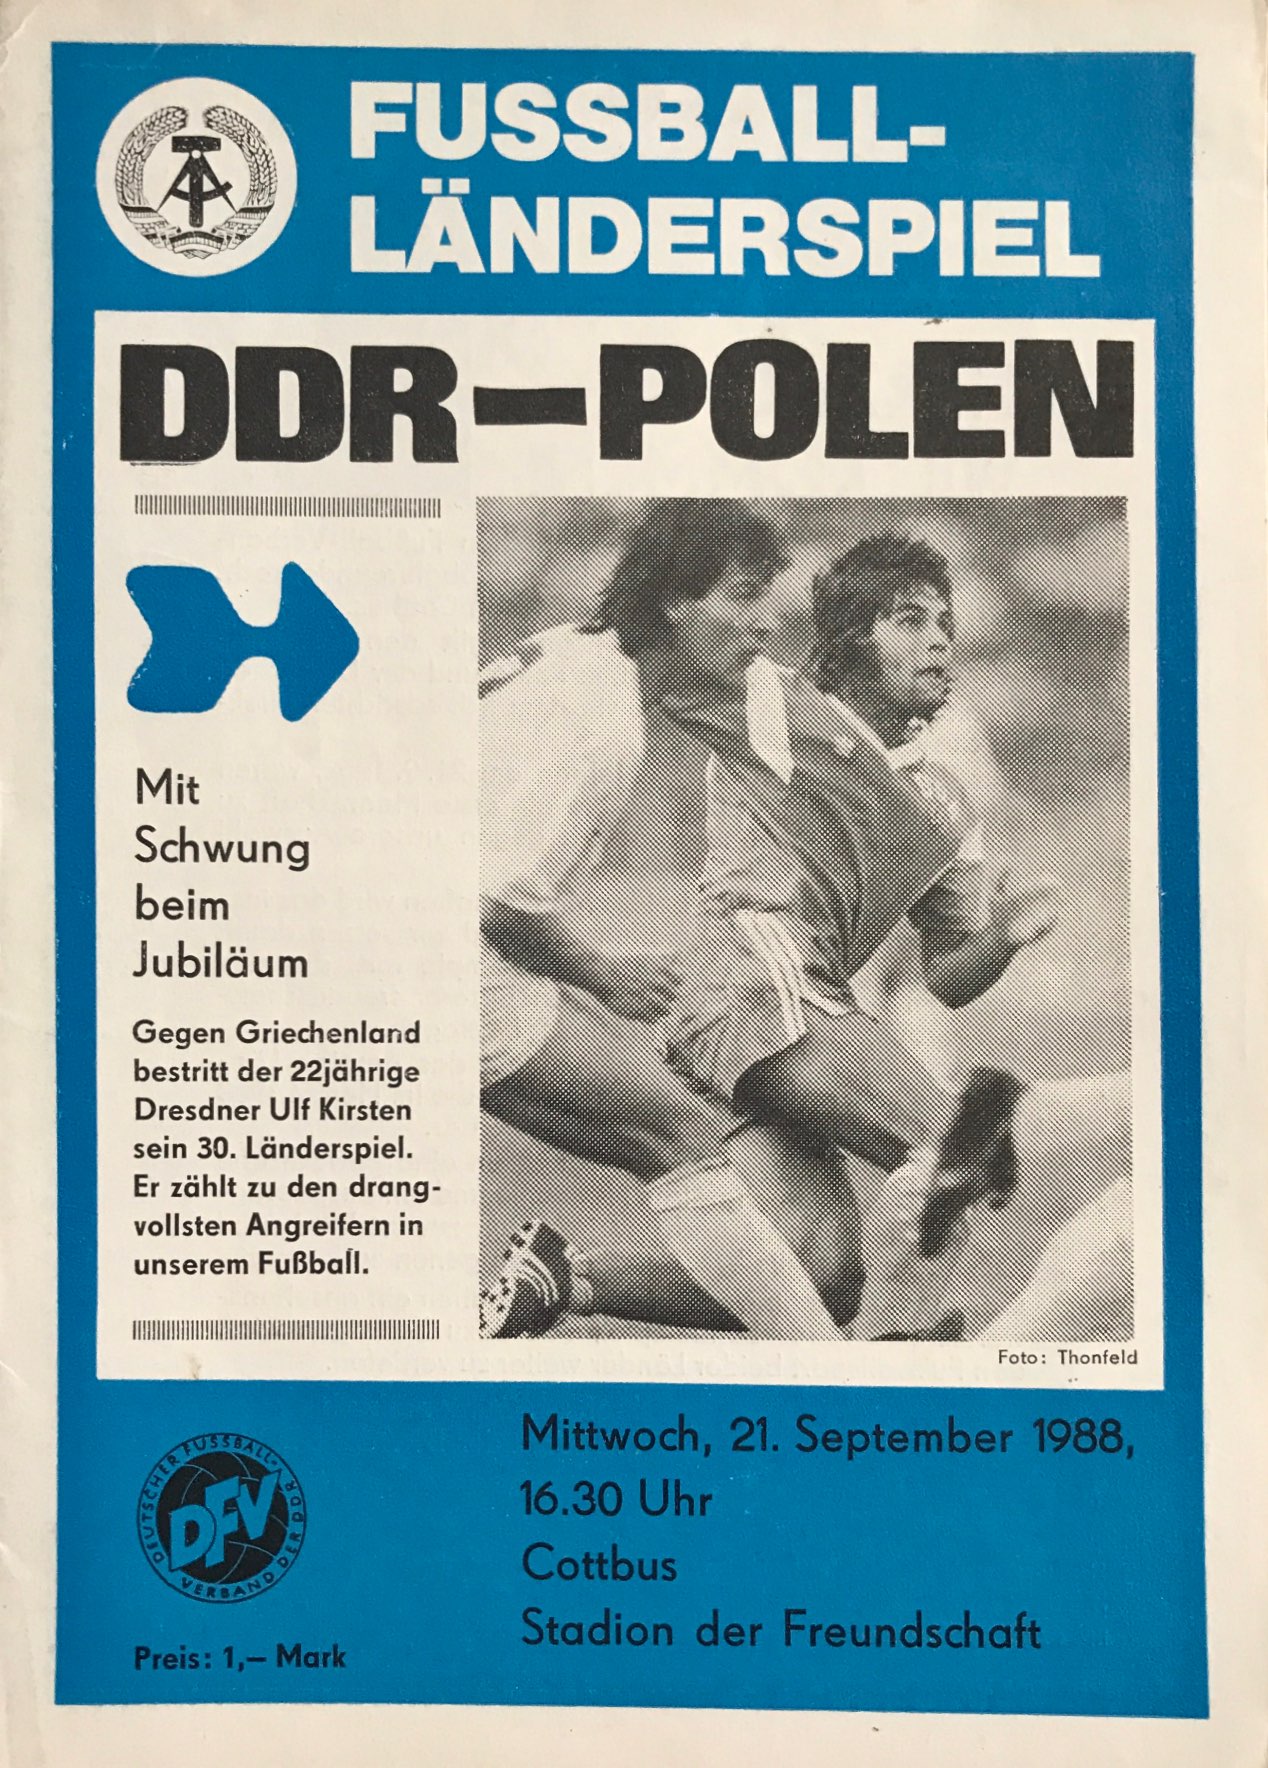 Program meczowy NRD - Polska 1:2 (21.09.1988)